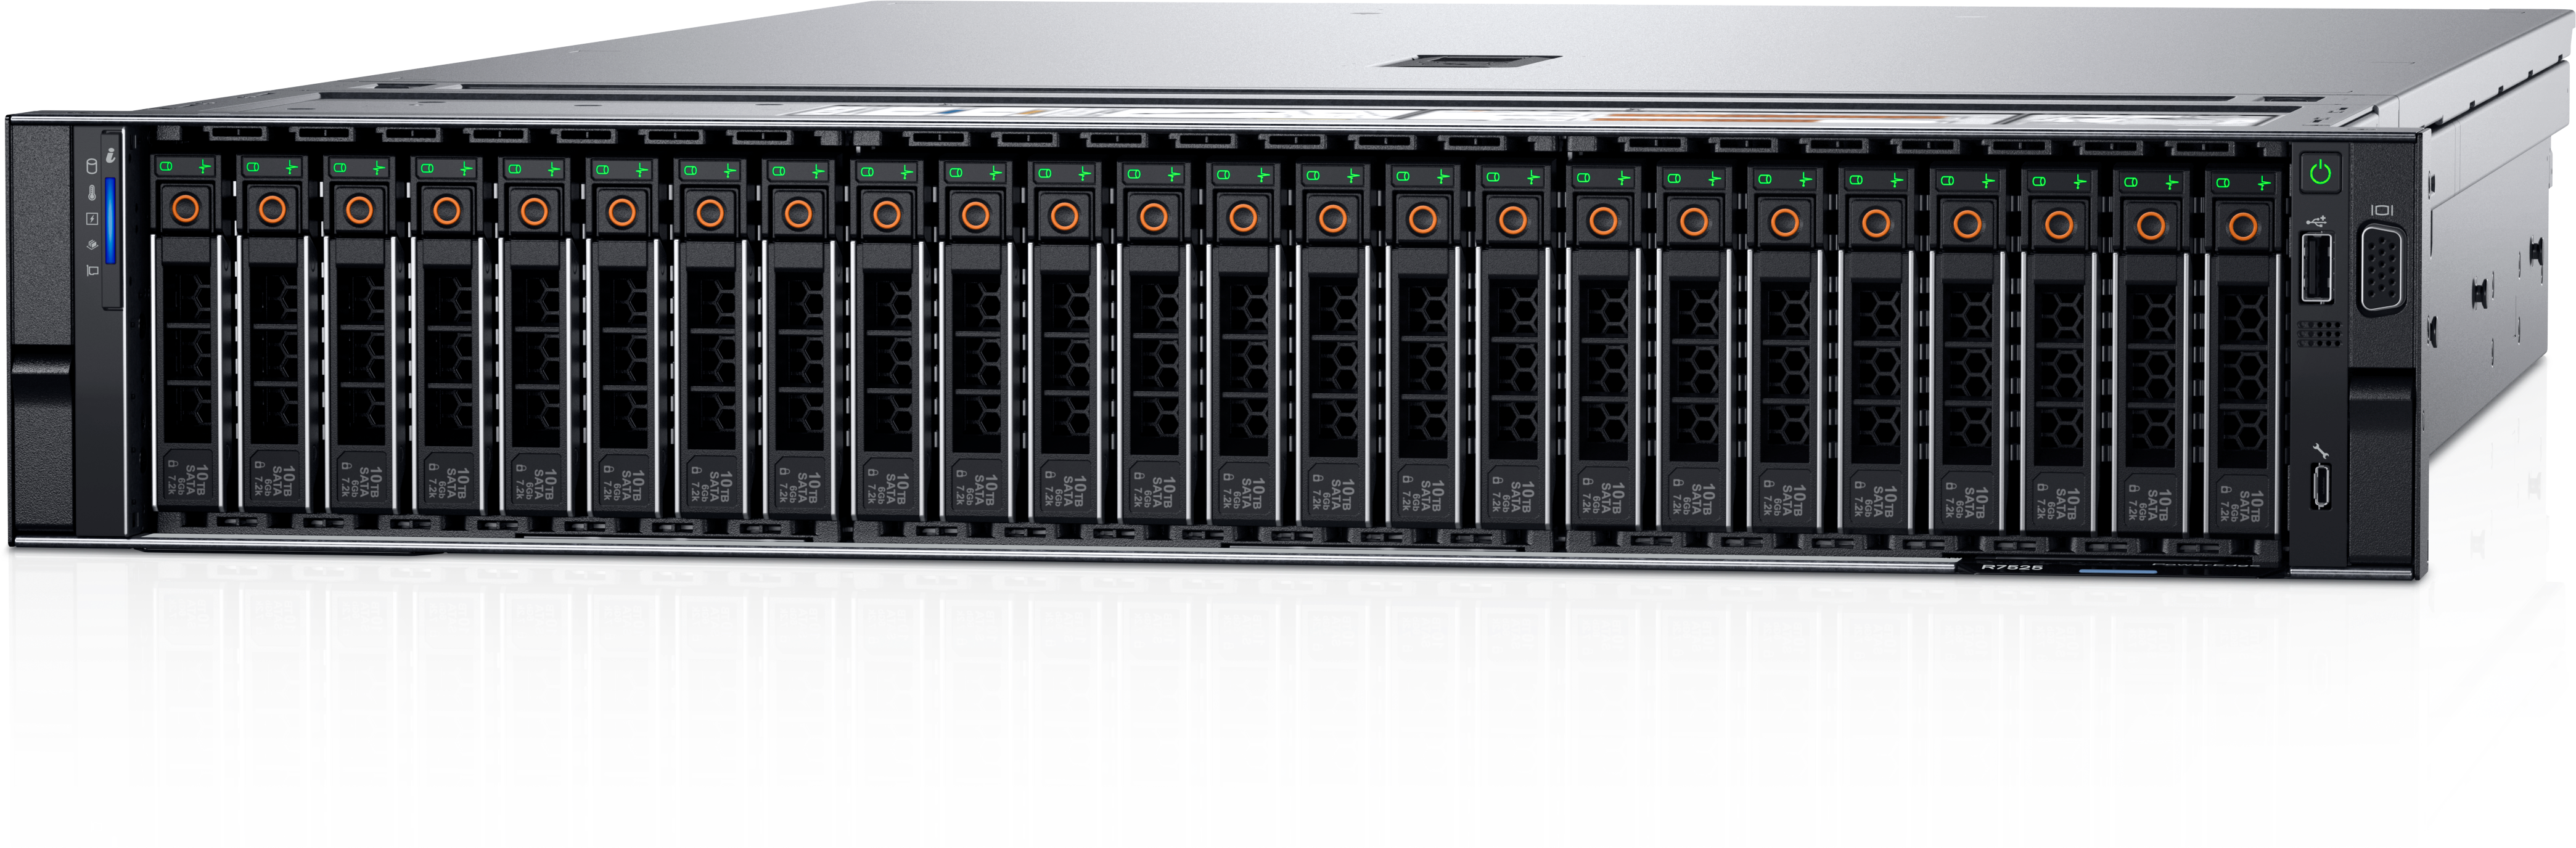 PowerEdge R7525 Rack Server | Dell USA